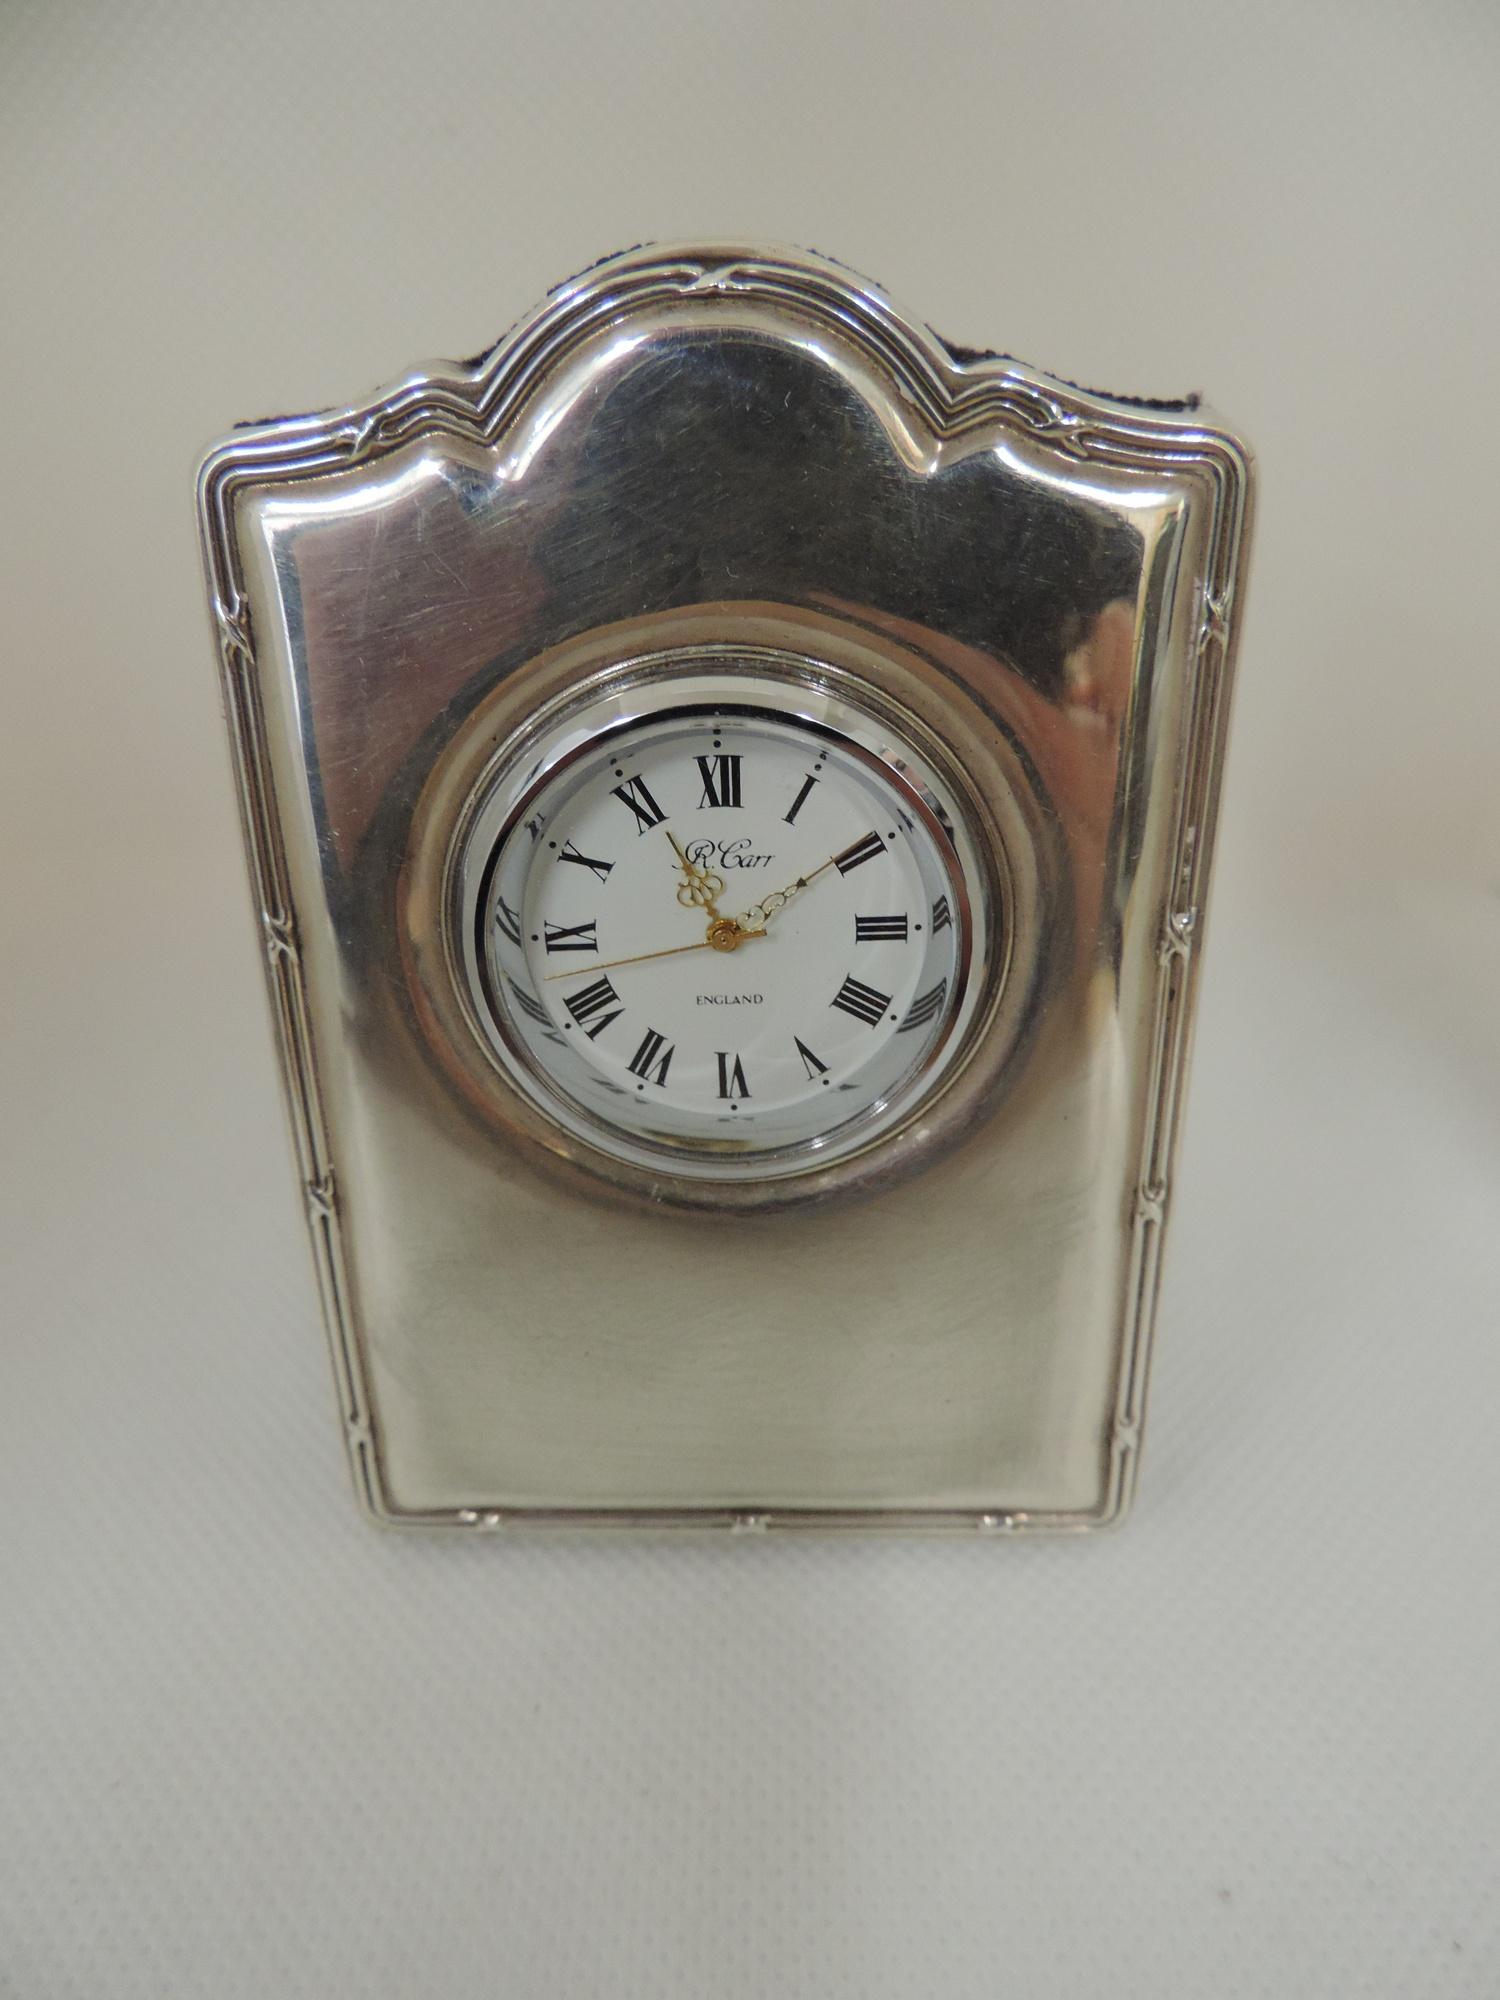 Silver Easel Clock - 9cm High